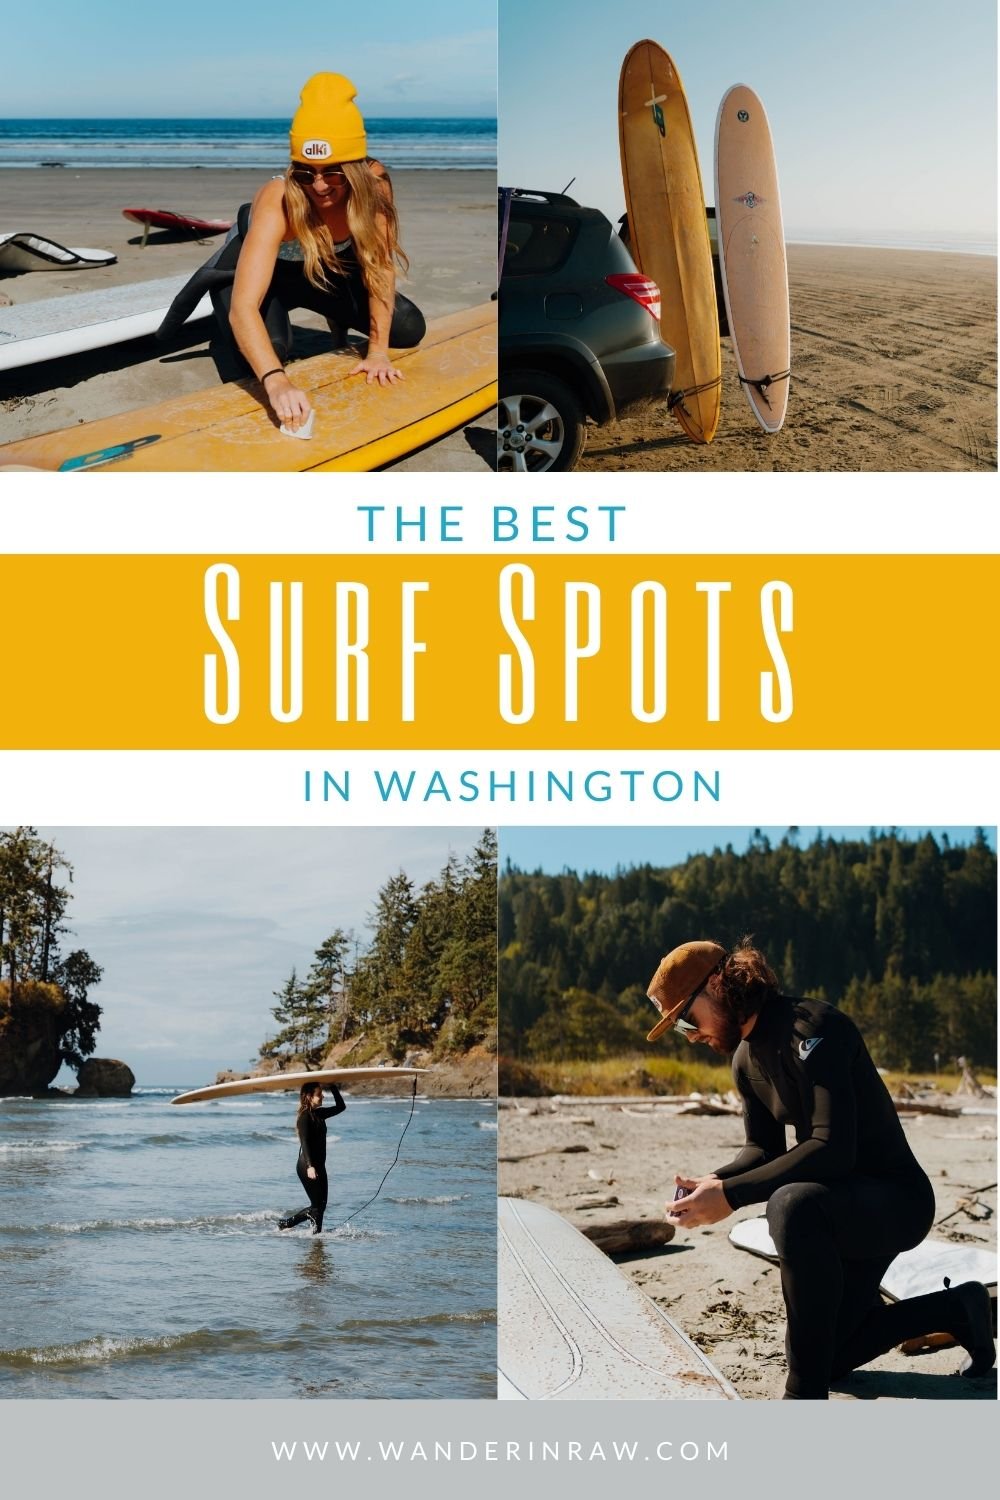 The Best Surf Spots in Washington